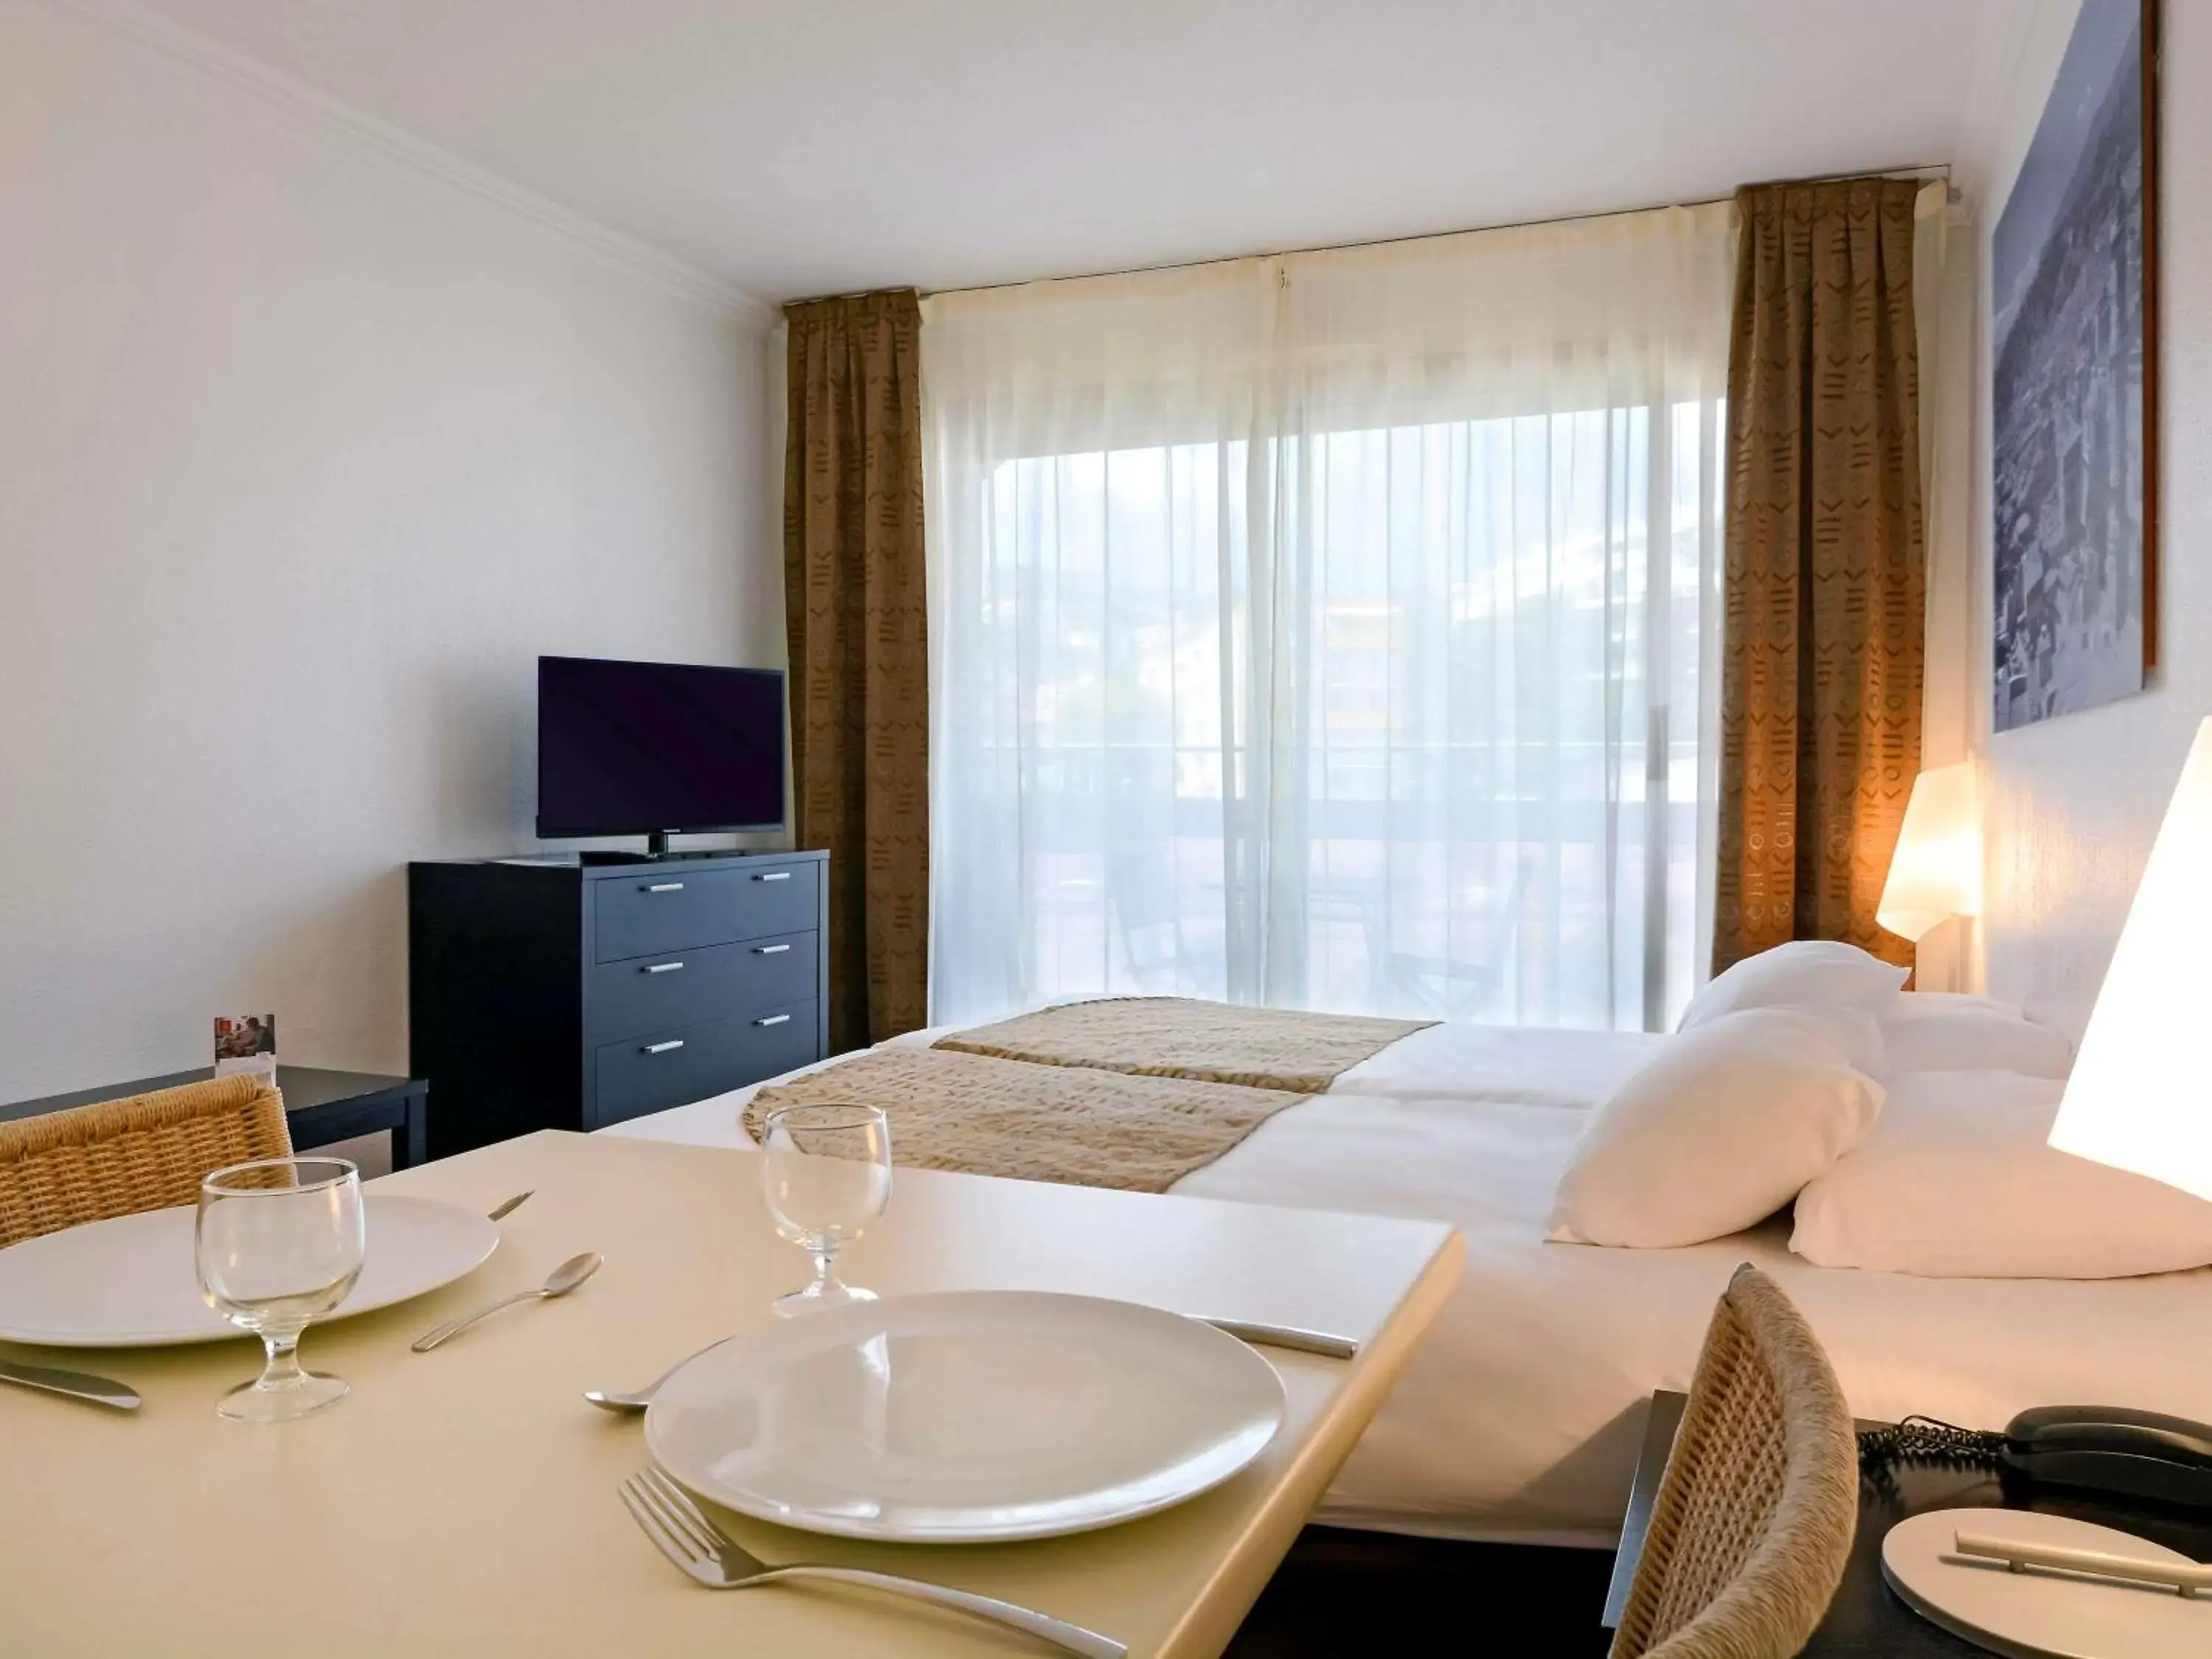 Photo of the whole room, Dining Area in Aparthotel Adagio Nice Promenade des Anglais